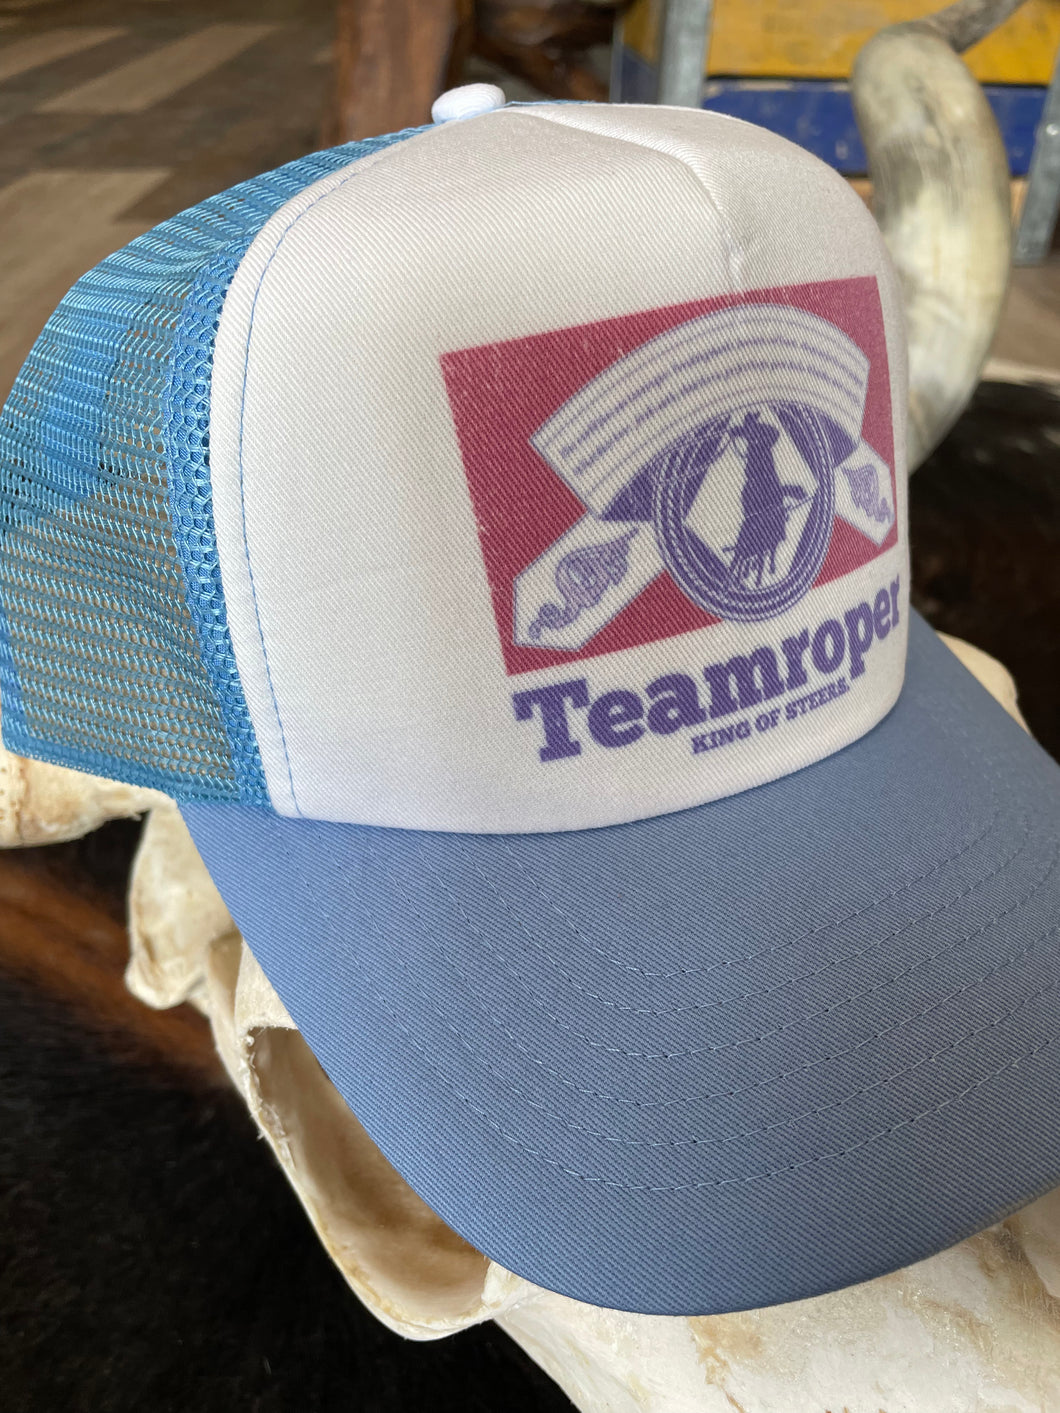 Teamroper Blue Trucker Hat